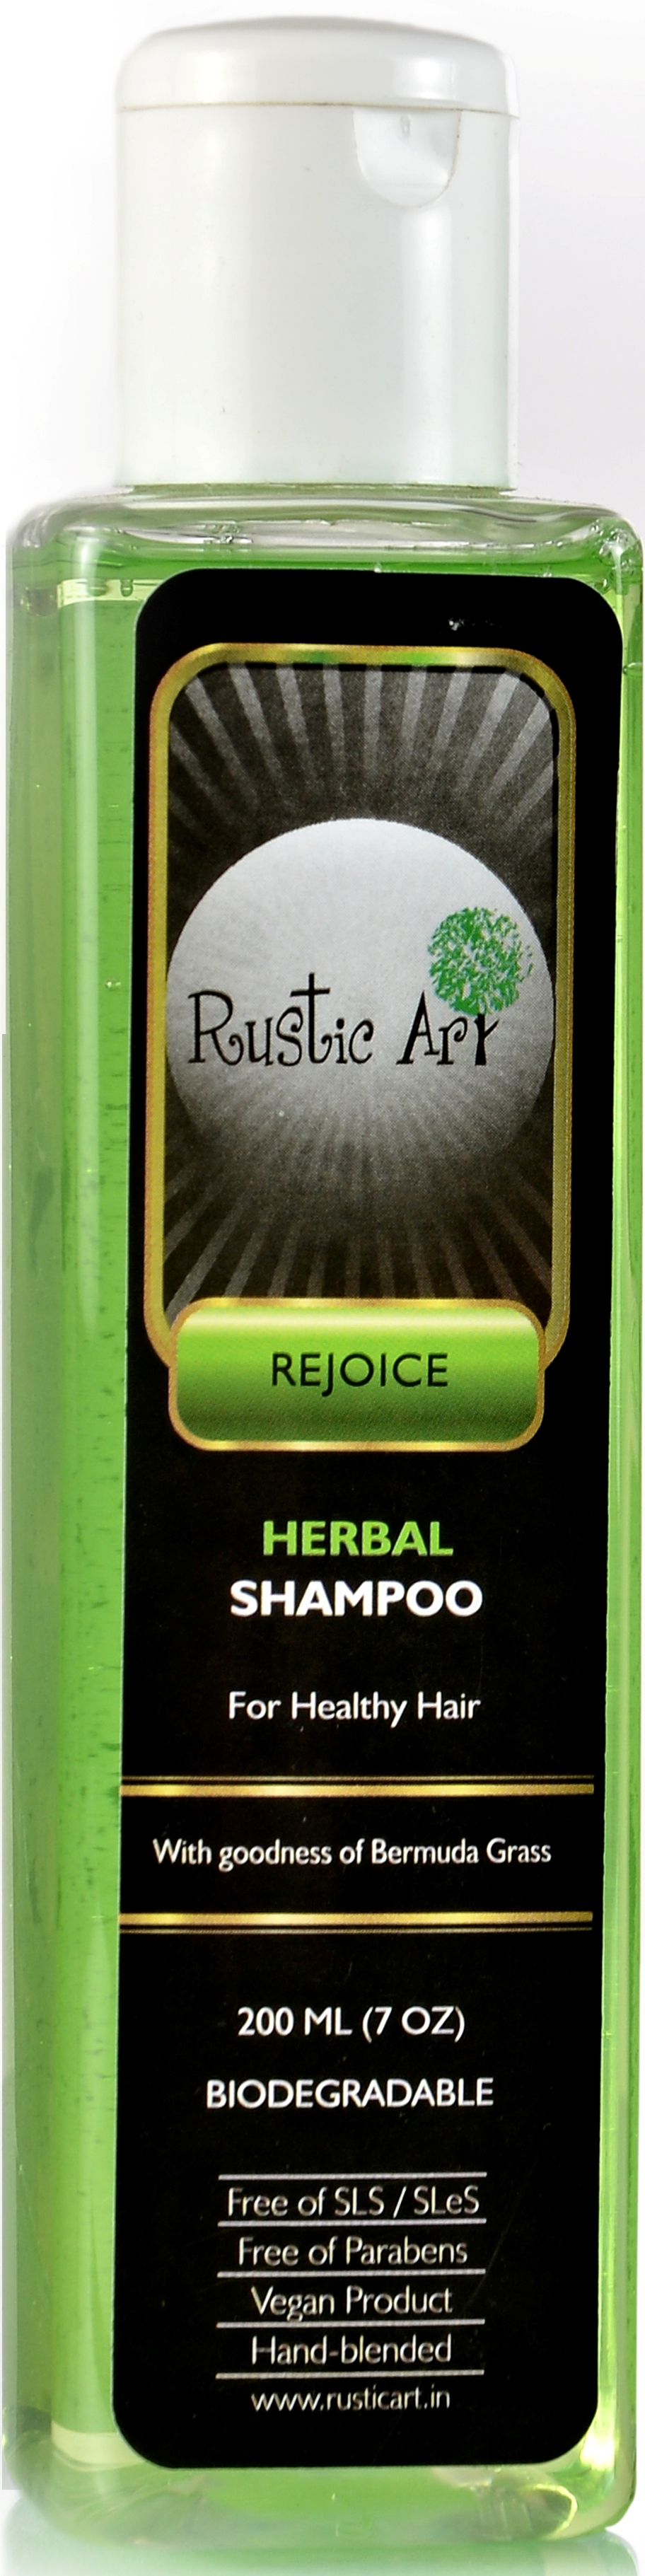 Buy Rustic Art Biodegradable Herbal Shampoo at Best Price Online